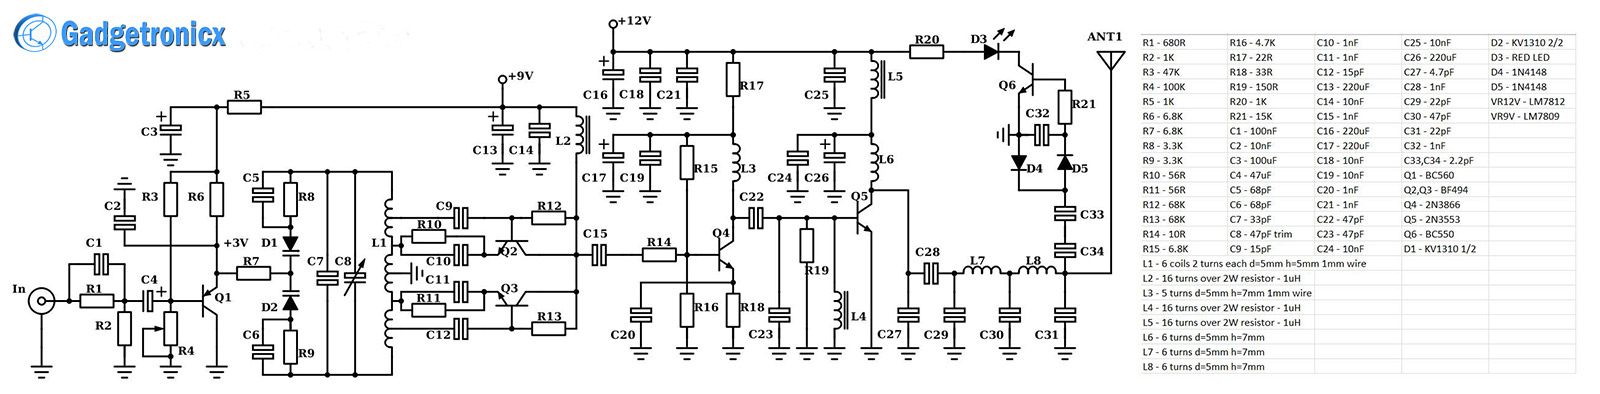 fm-transmitter-circuit-diagram